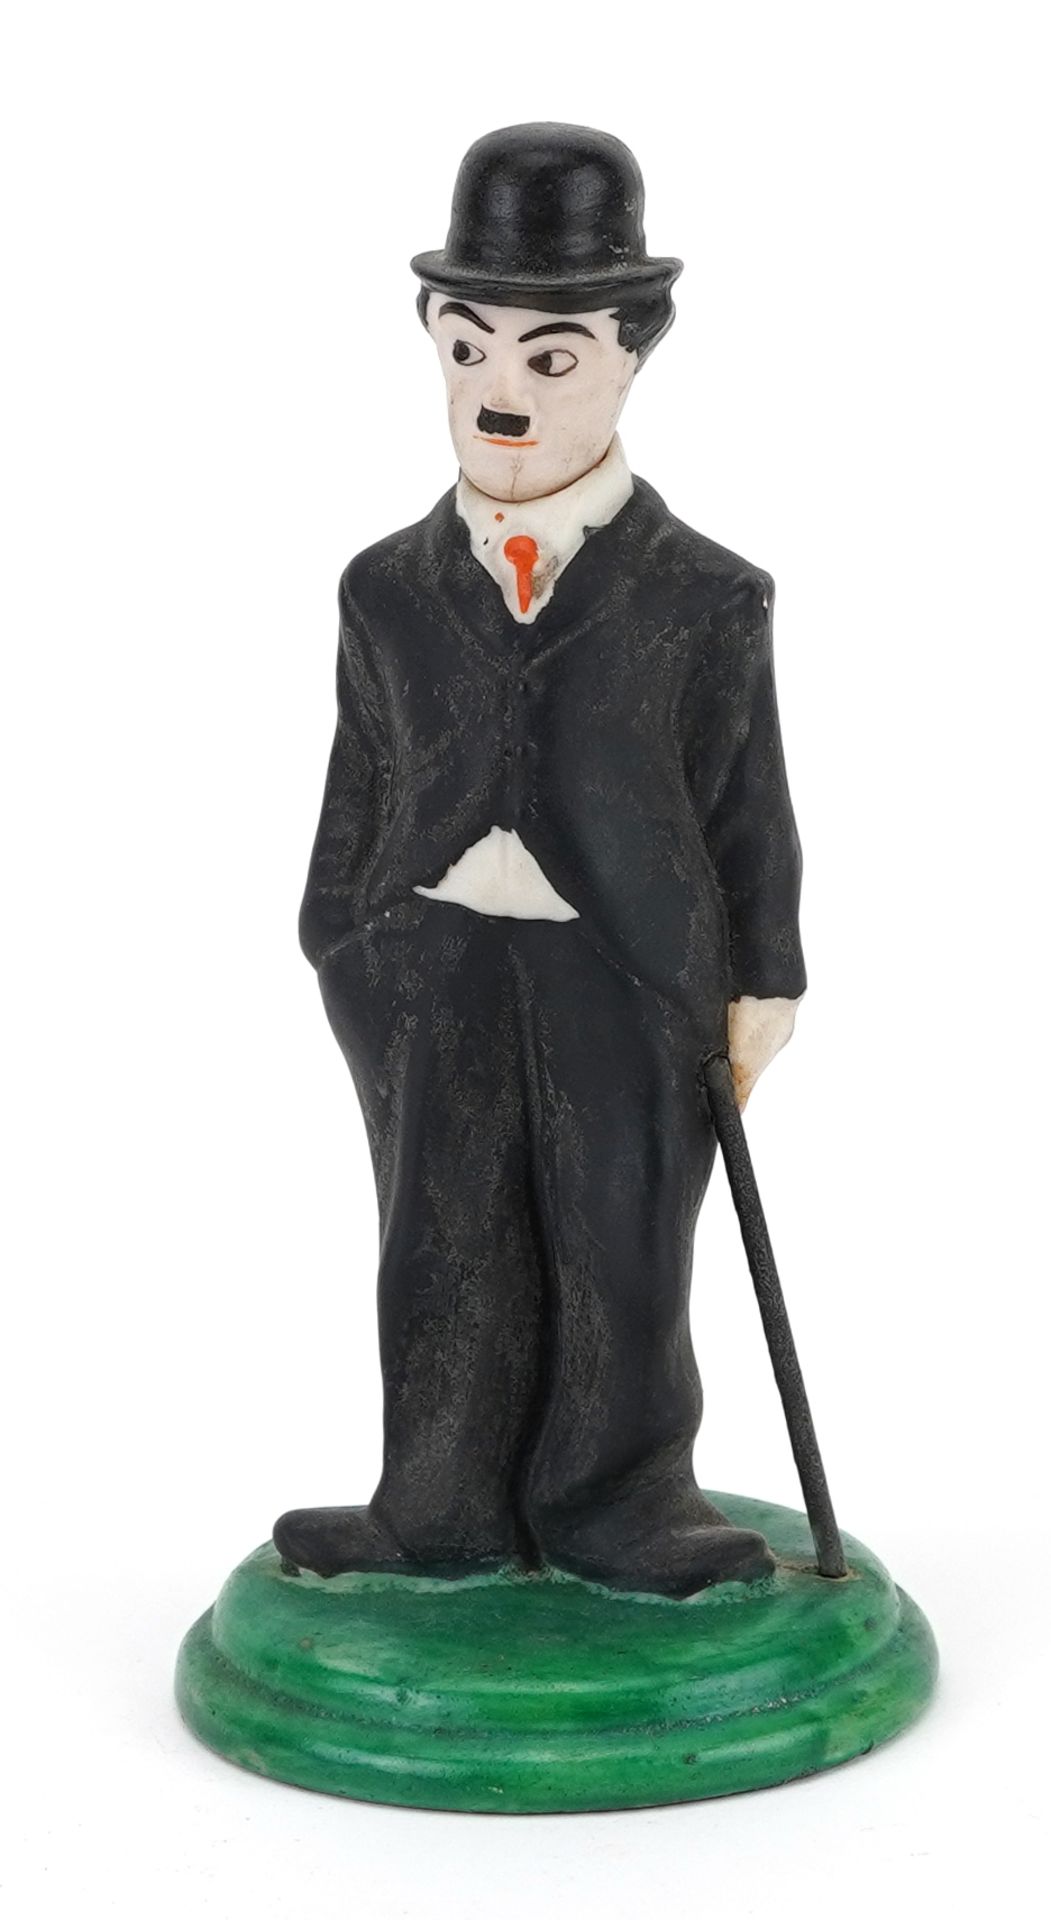 Carlton Ware, Early 20th century figure of Little Tramp Charlie Chaplin with nodding head,